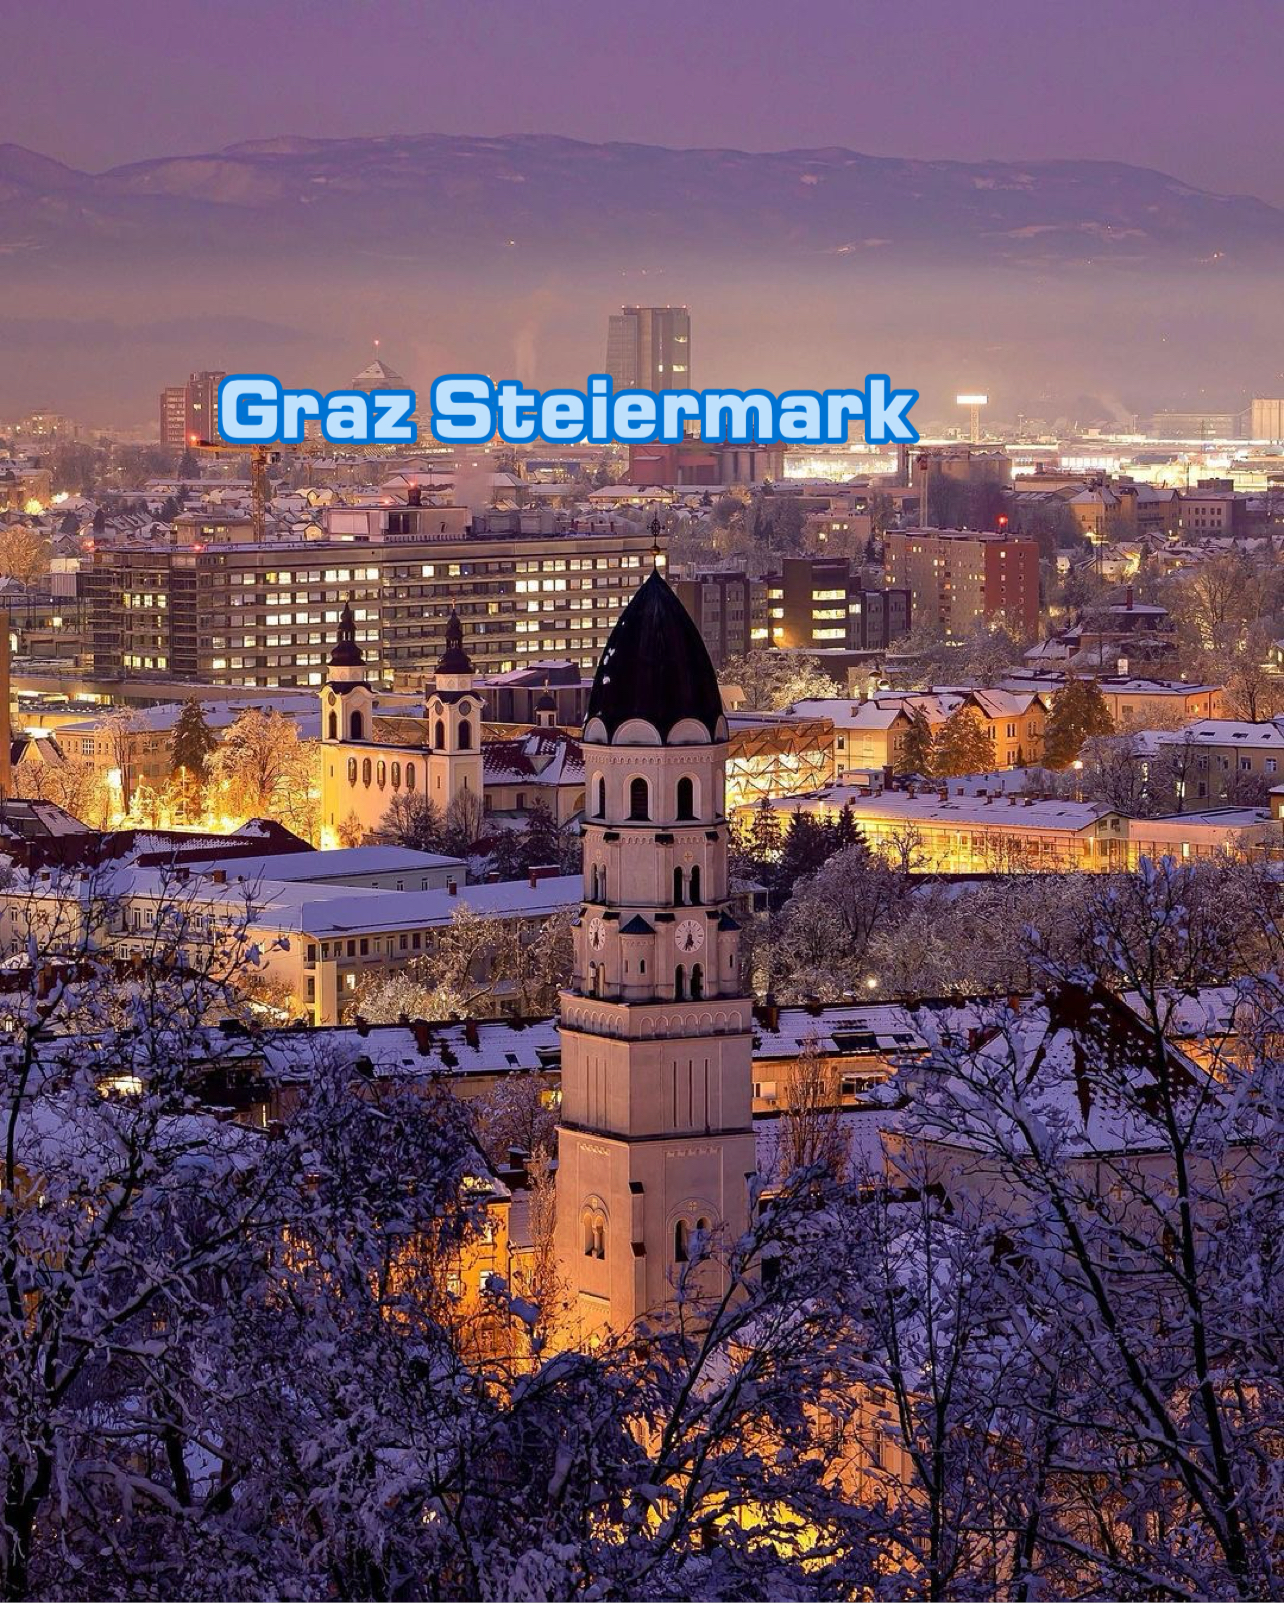 Graz Steiermark